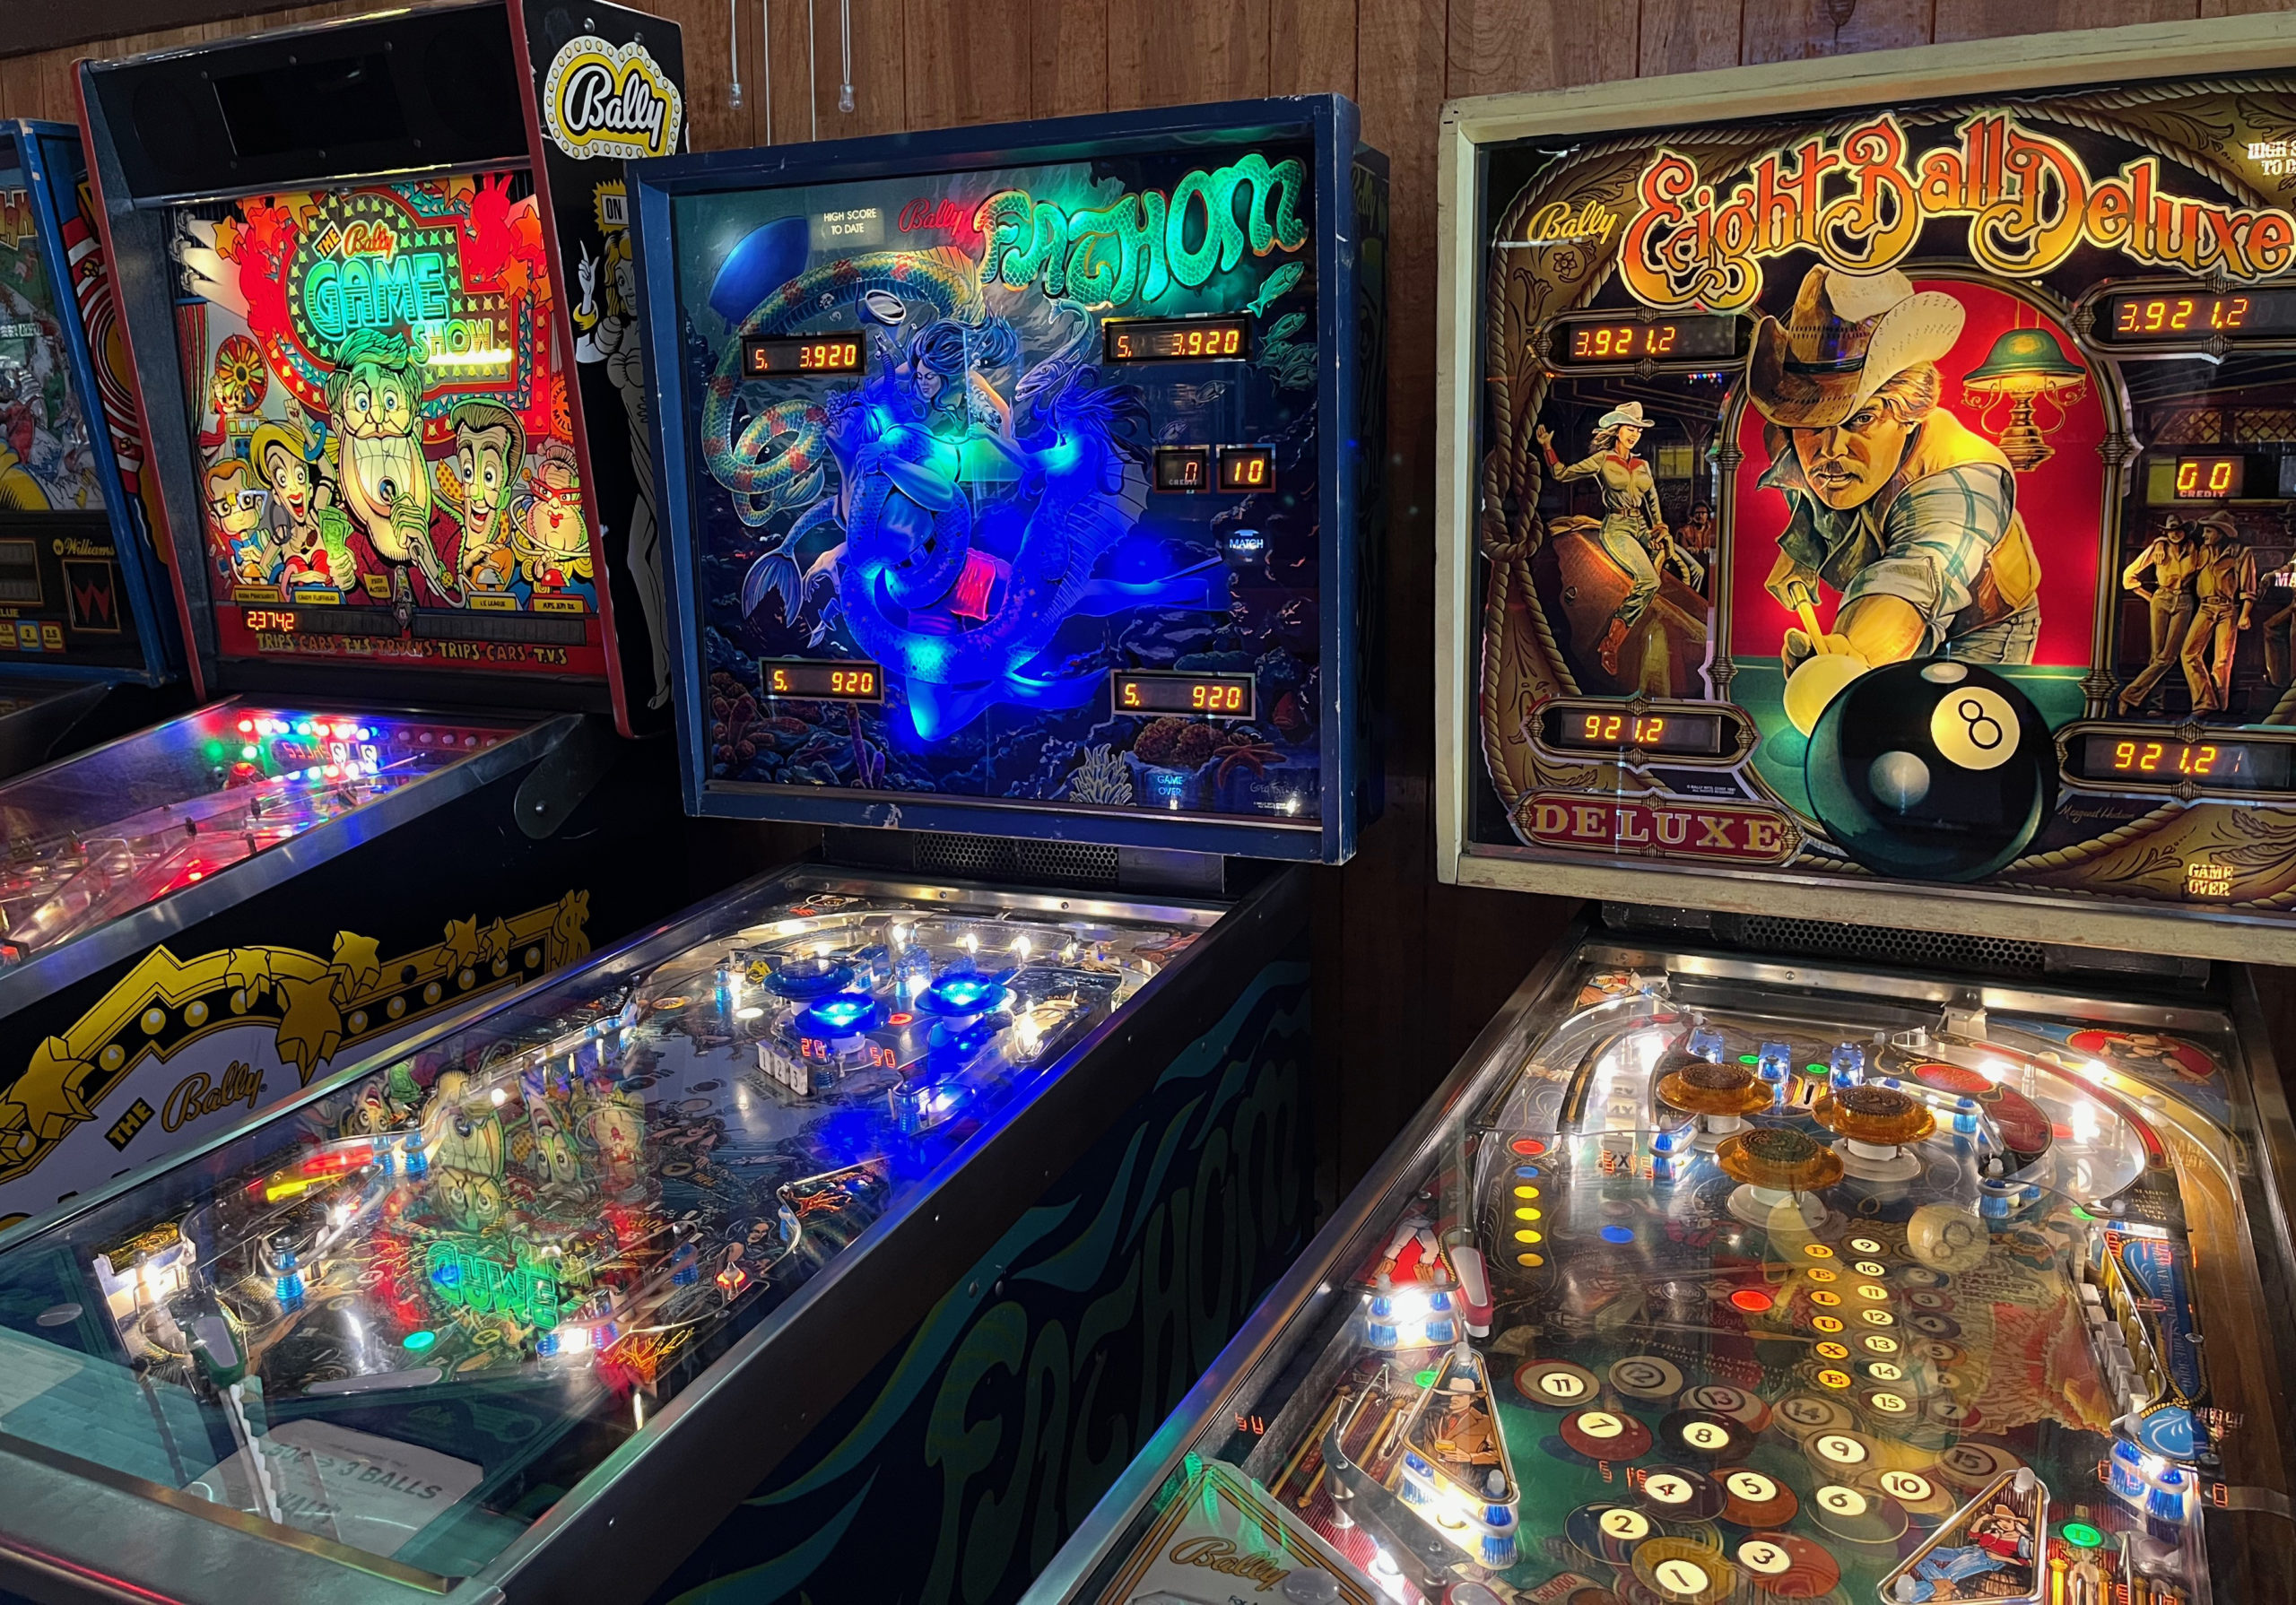 Eagle Rock pinball arcade bank of games